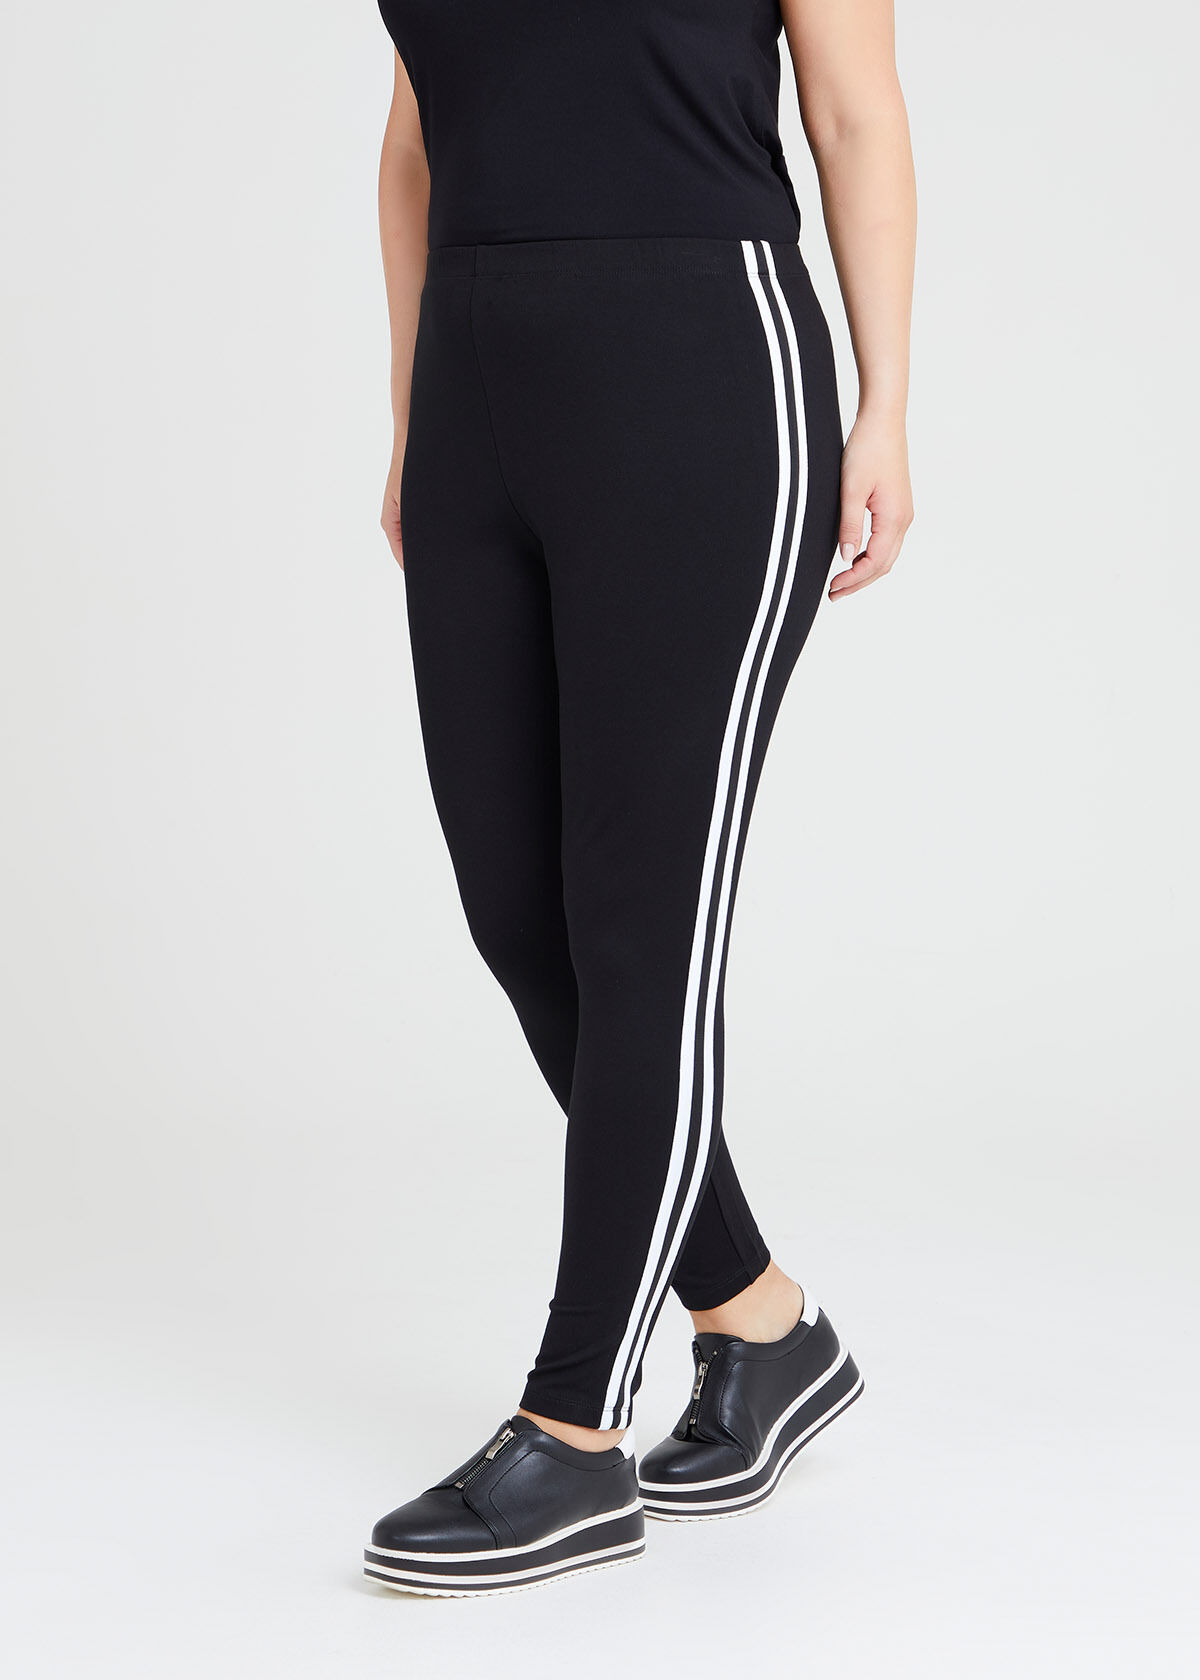 ABAFIP Women's High Waist Striped Leggings Elastic Waistband Stretch Slim  Fit Workout Skinny Yoga Pants Tights, Black + White, S : Amazon.co.uk:  Fashion